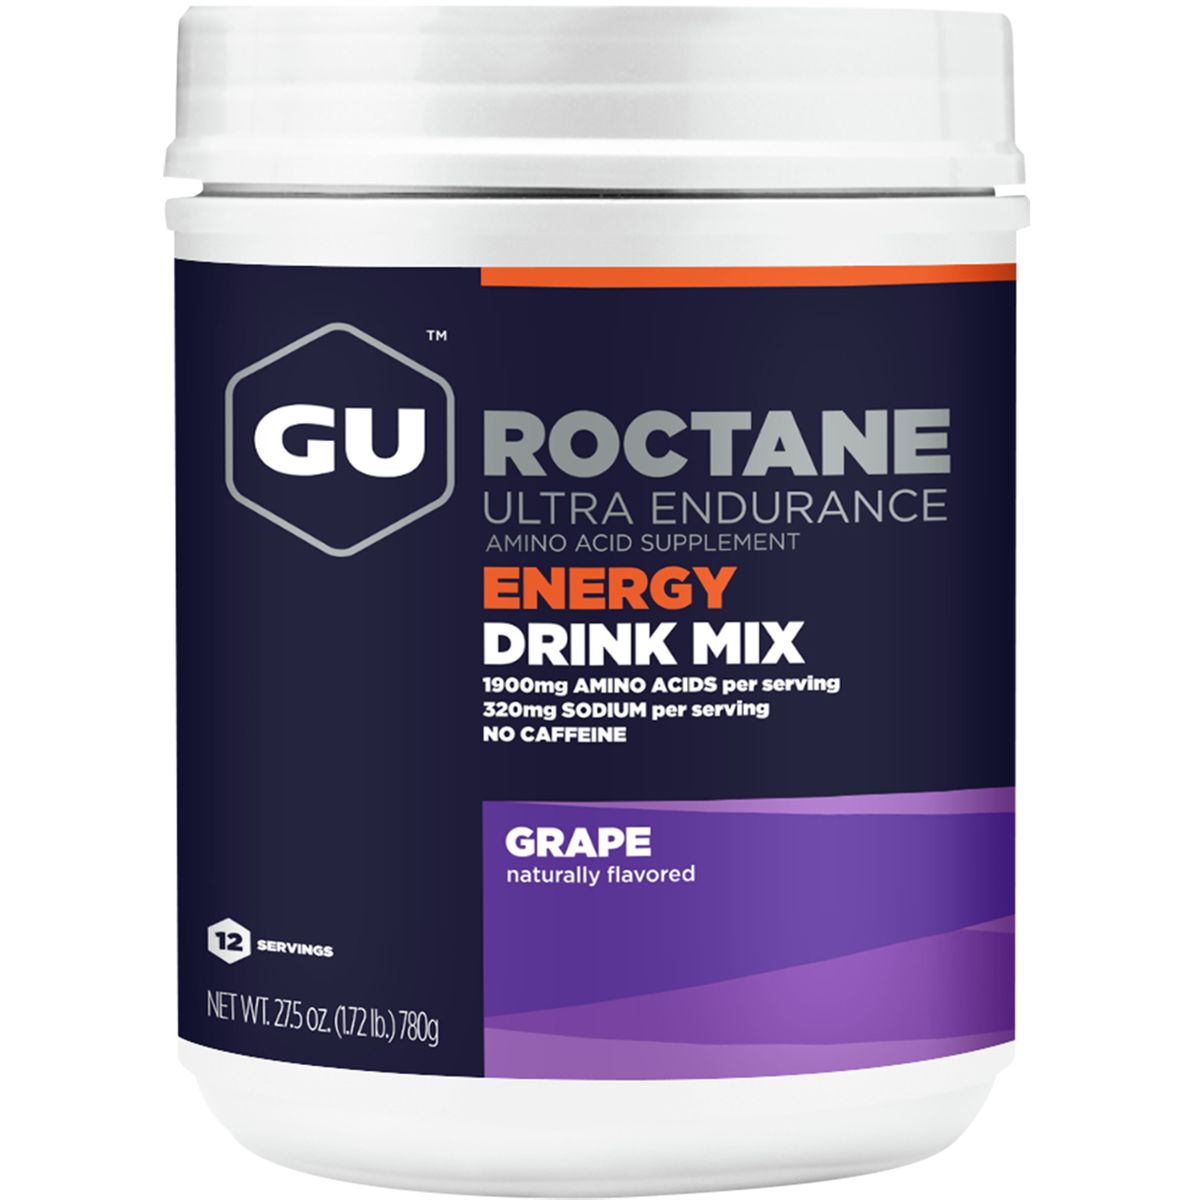 GU Roctane Energy Drink 24 Serving Canister